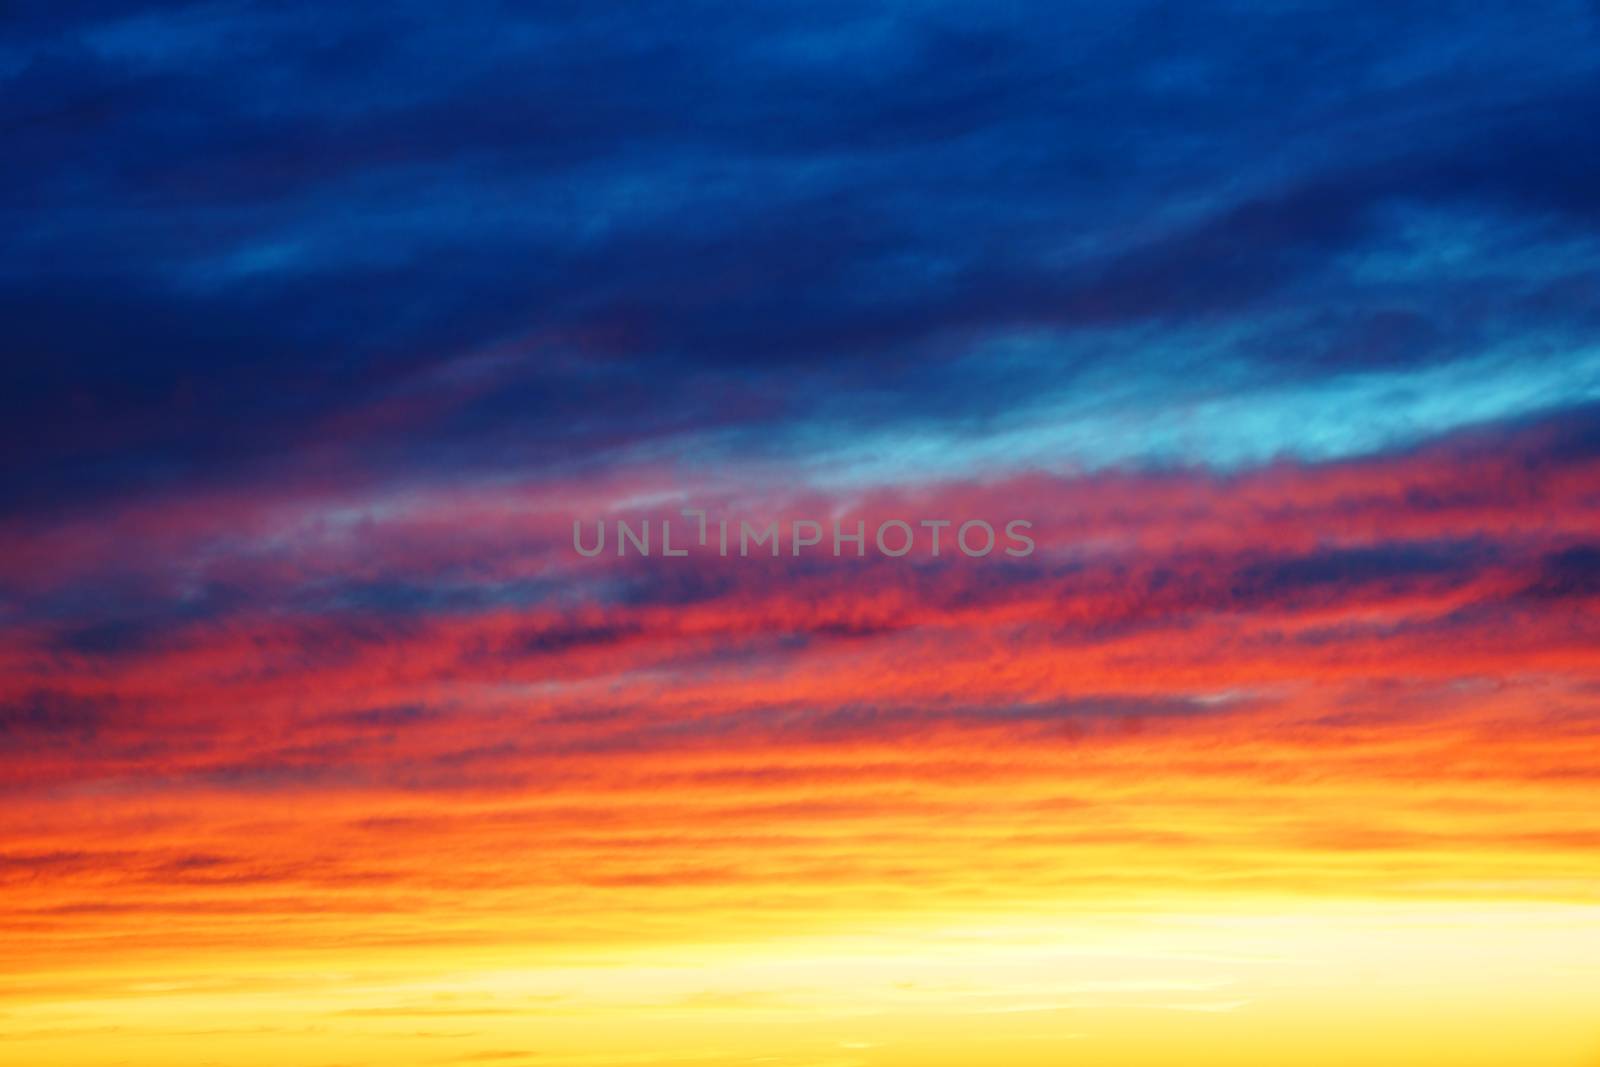 Stunning sunset by Mirage3